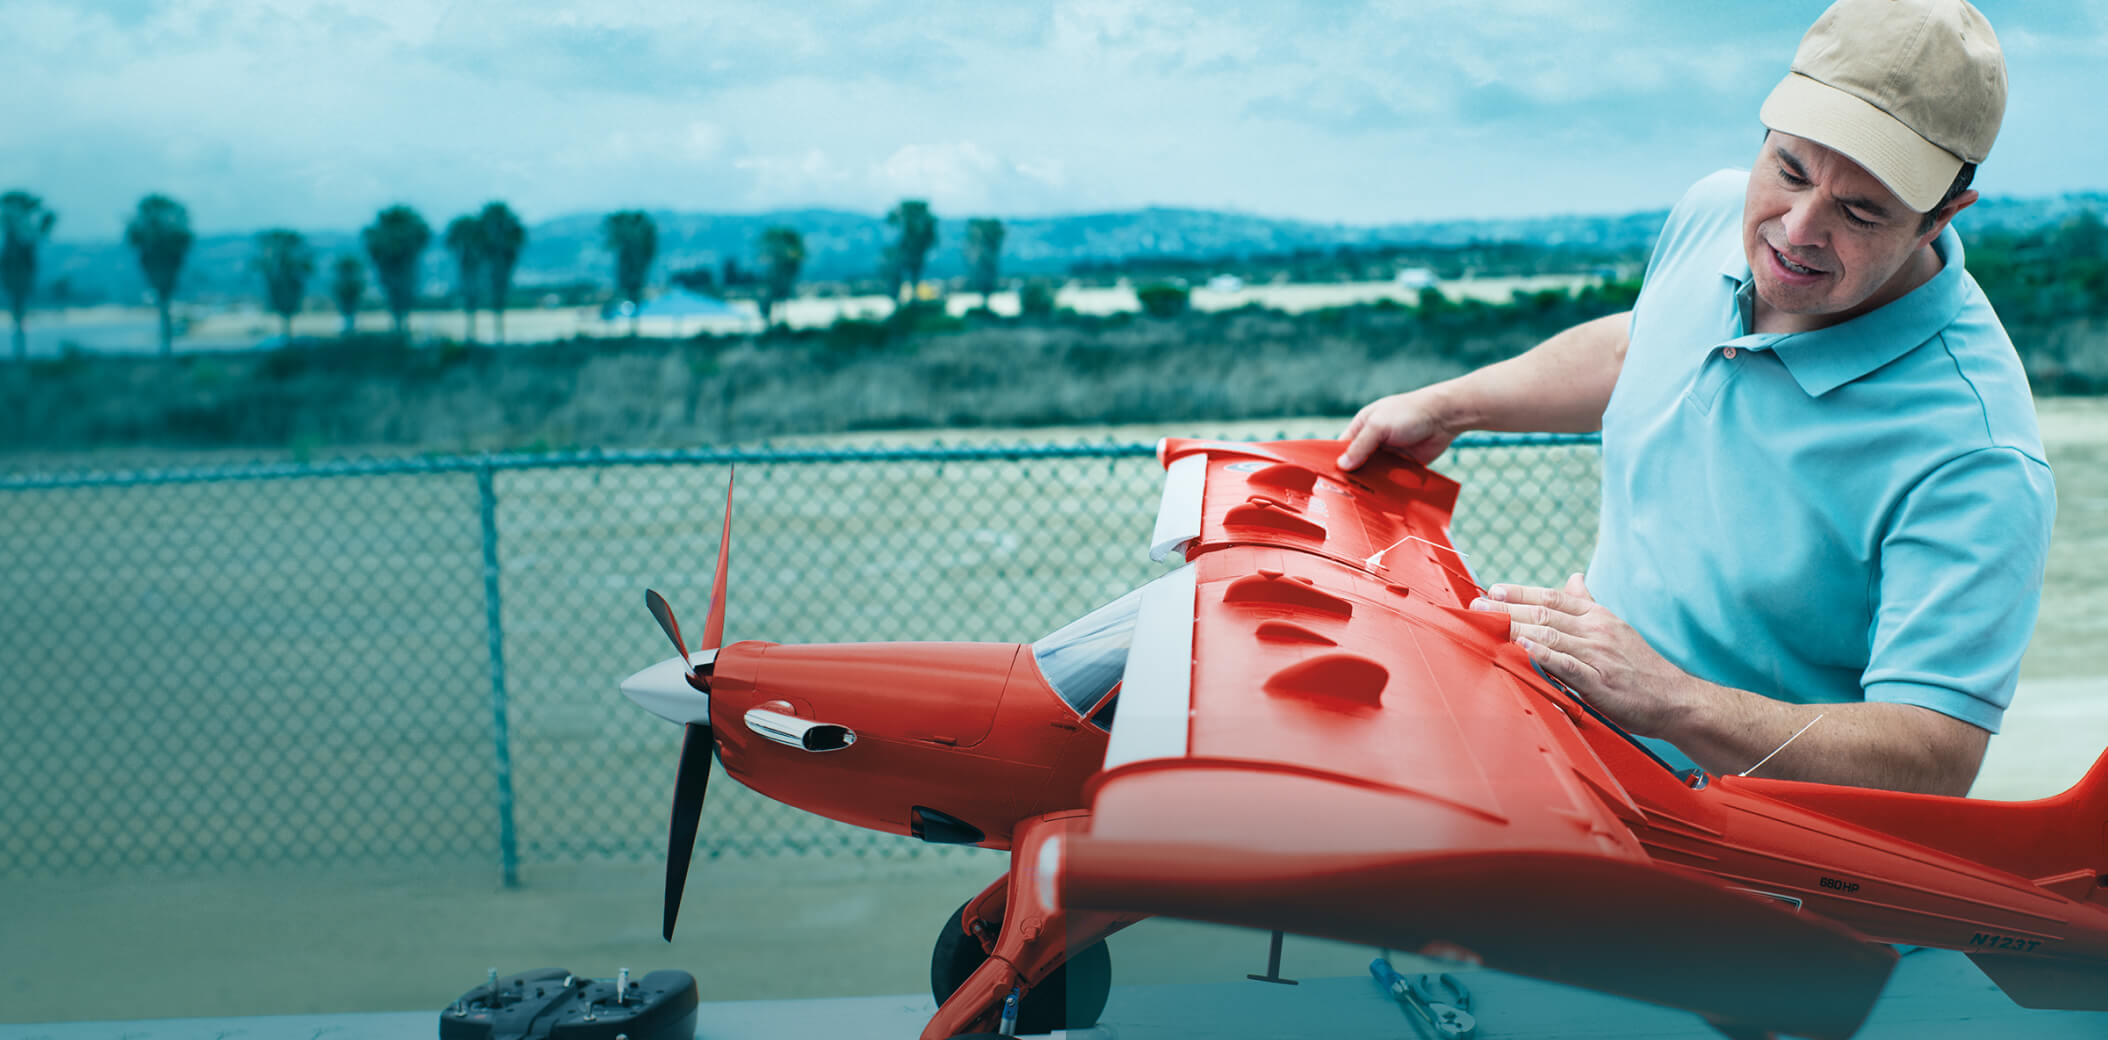 Ambassador Jared with model plane-image